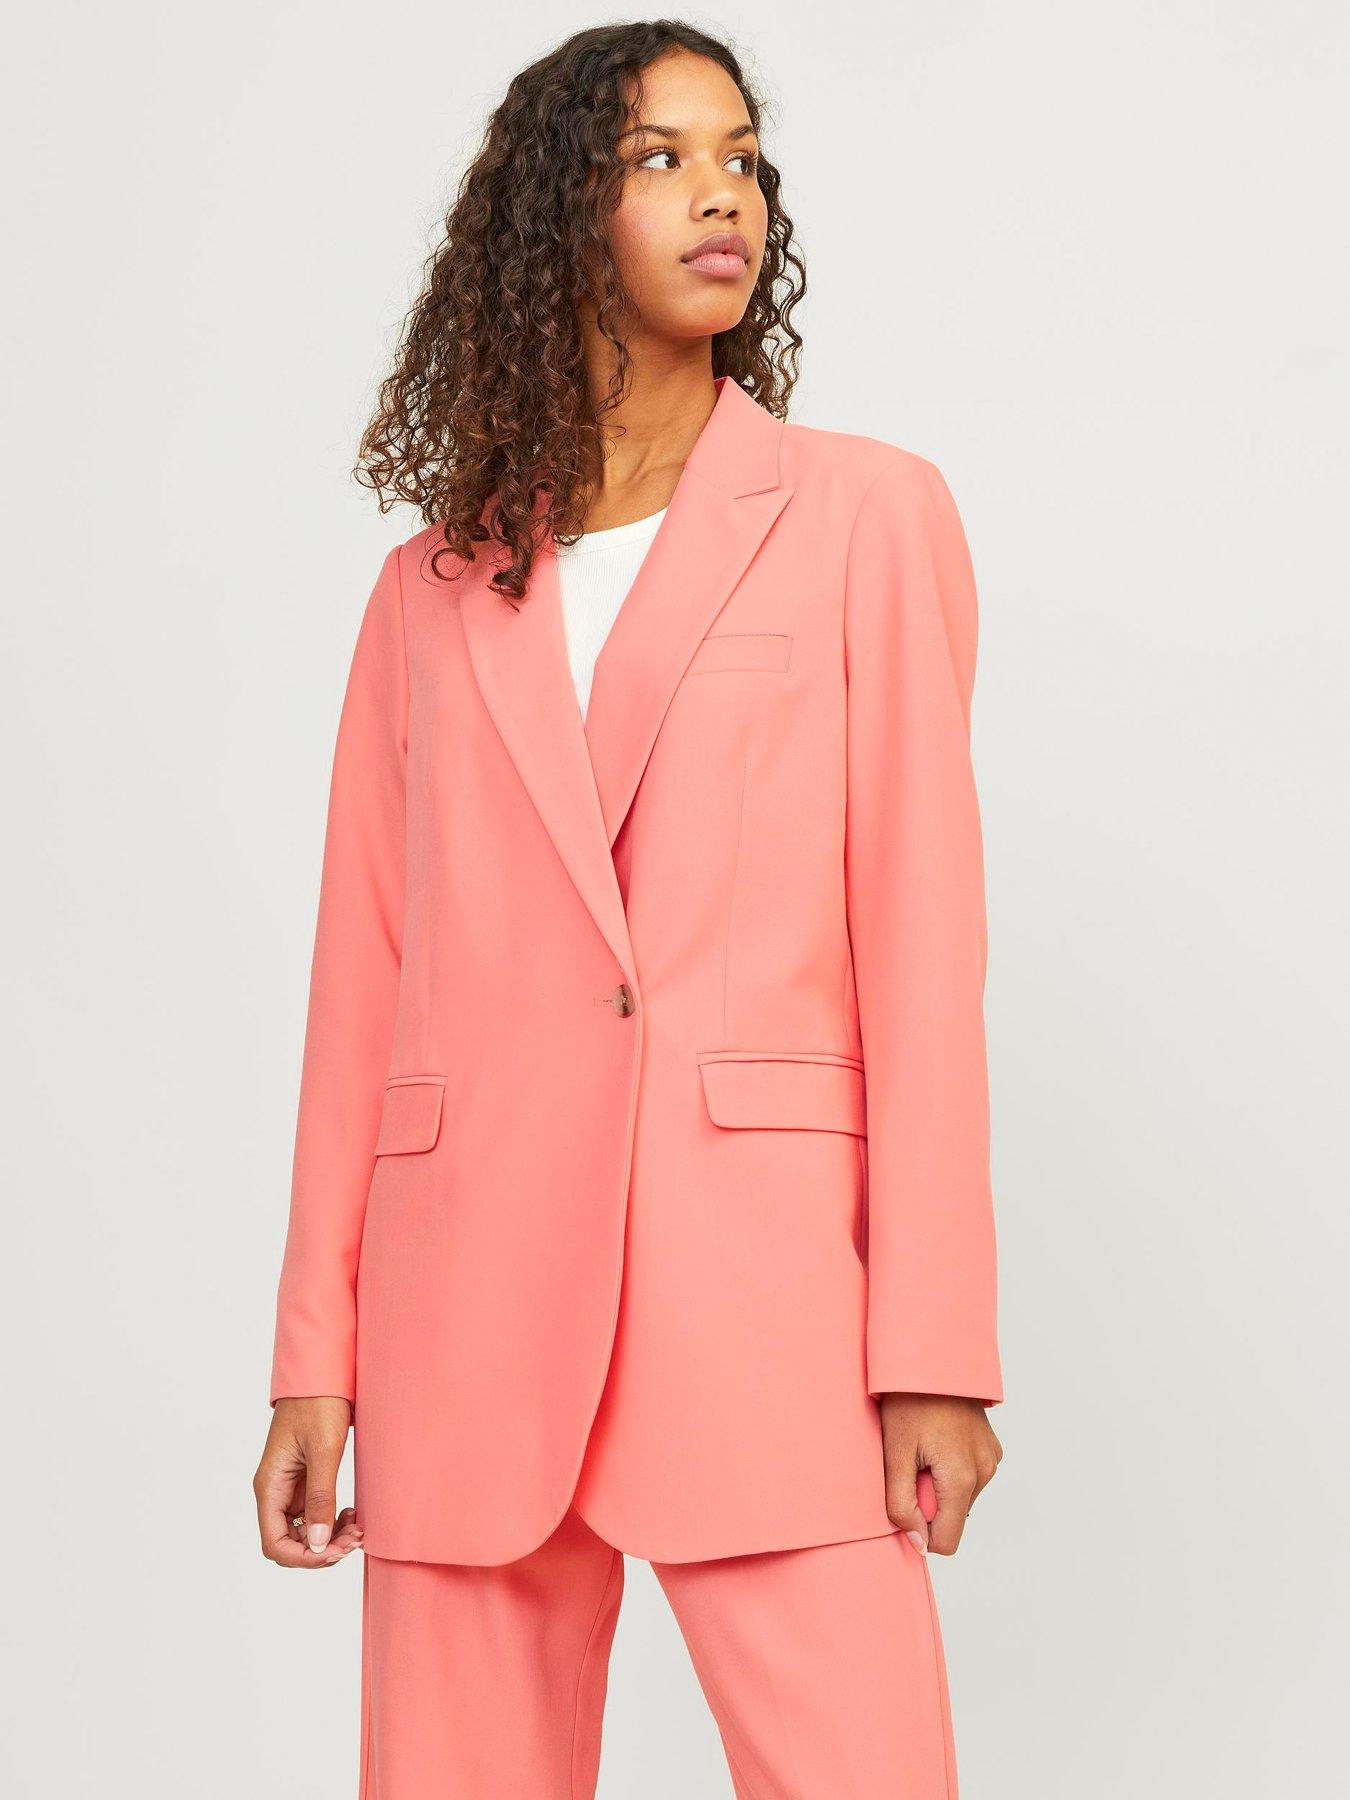 Women's Pink Blazers, Hot & Bright Pink